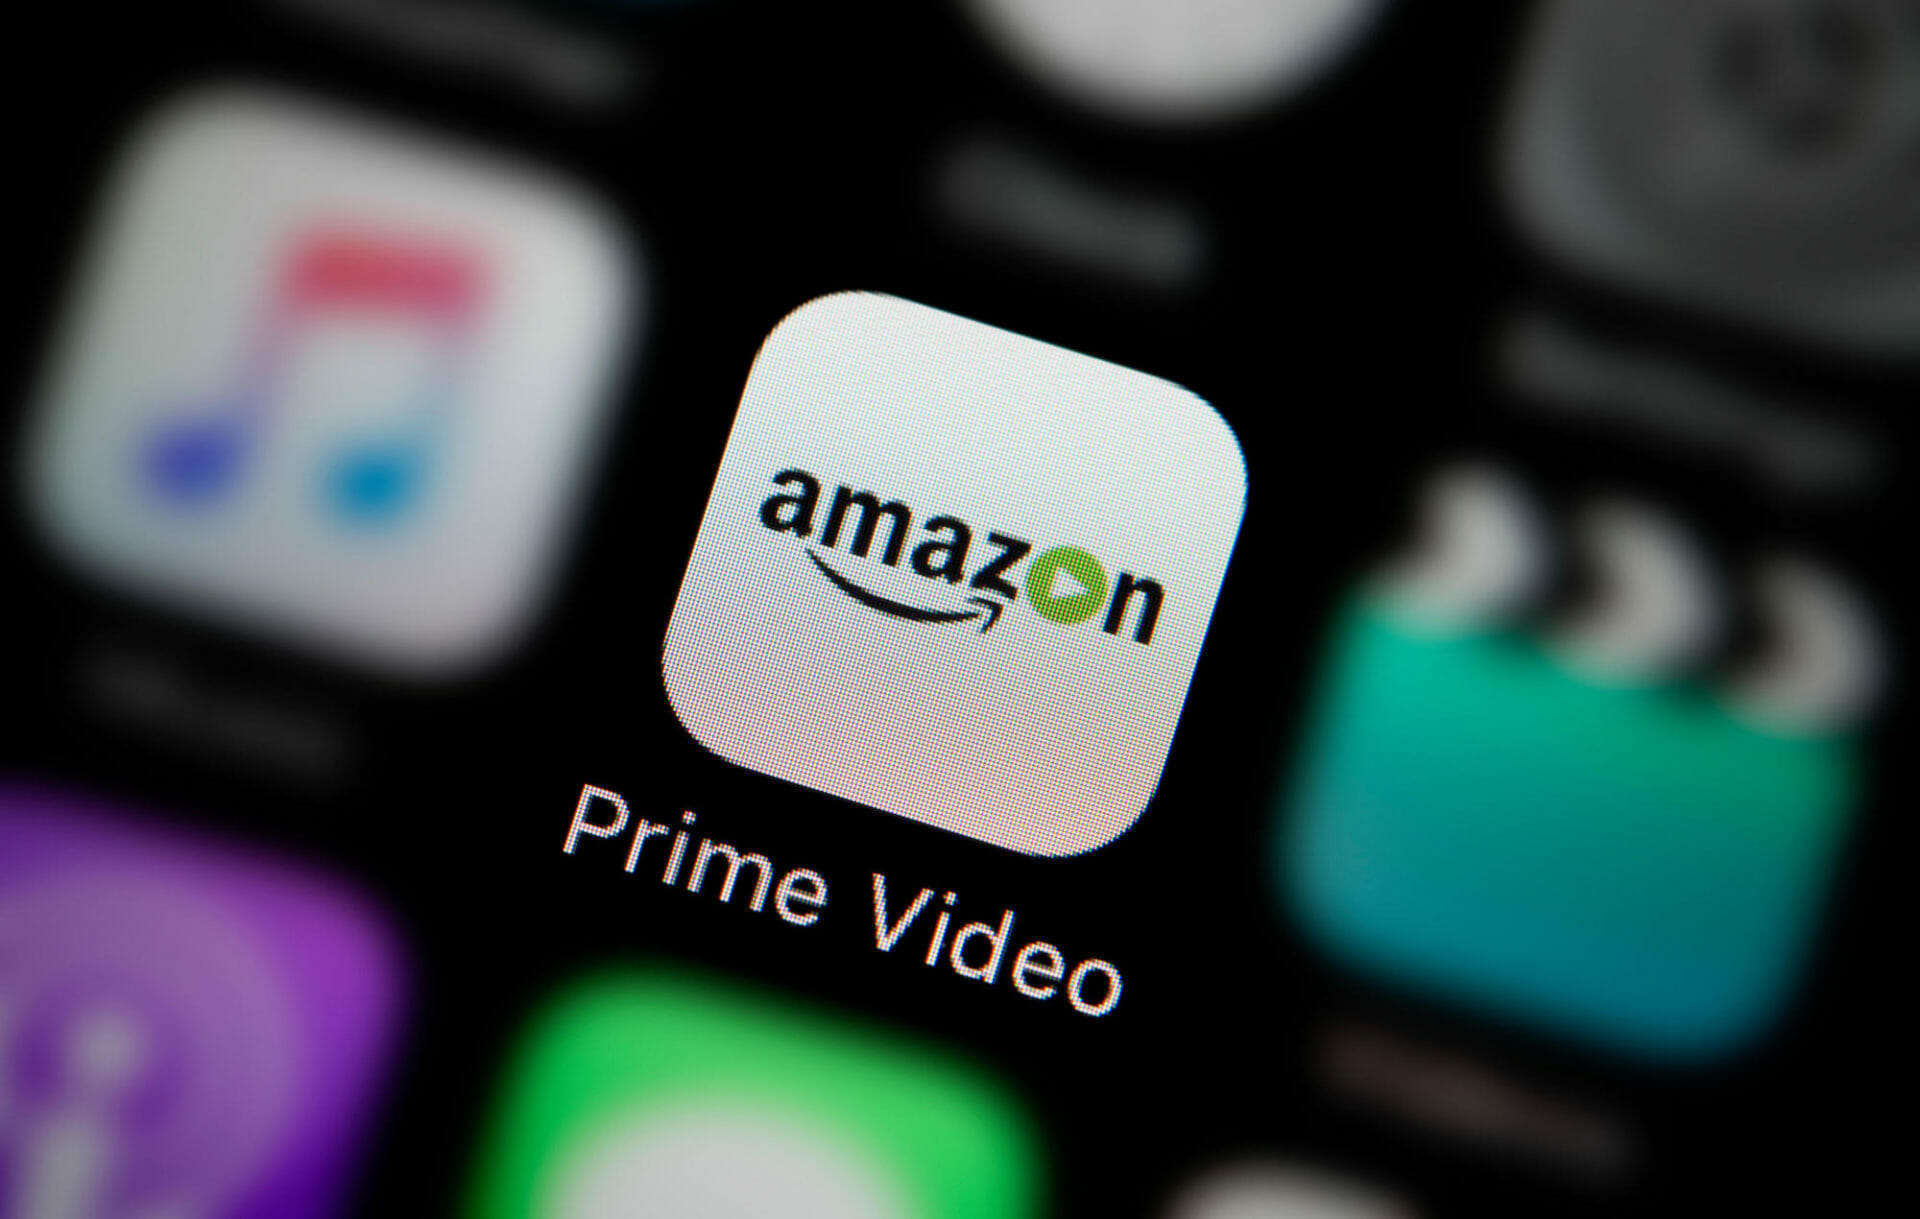 Amazon Prime Video app on a phone